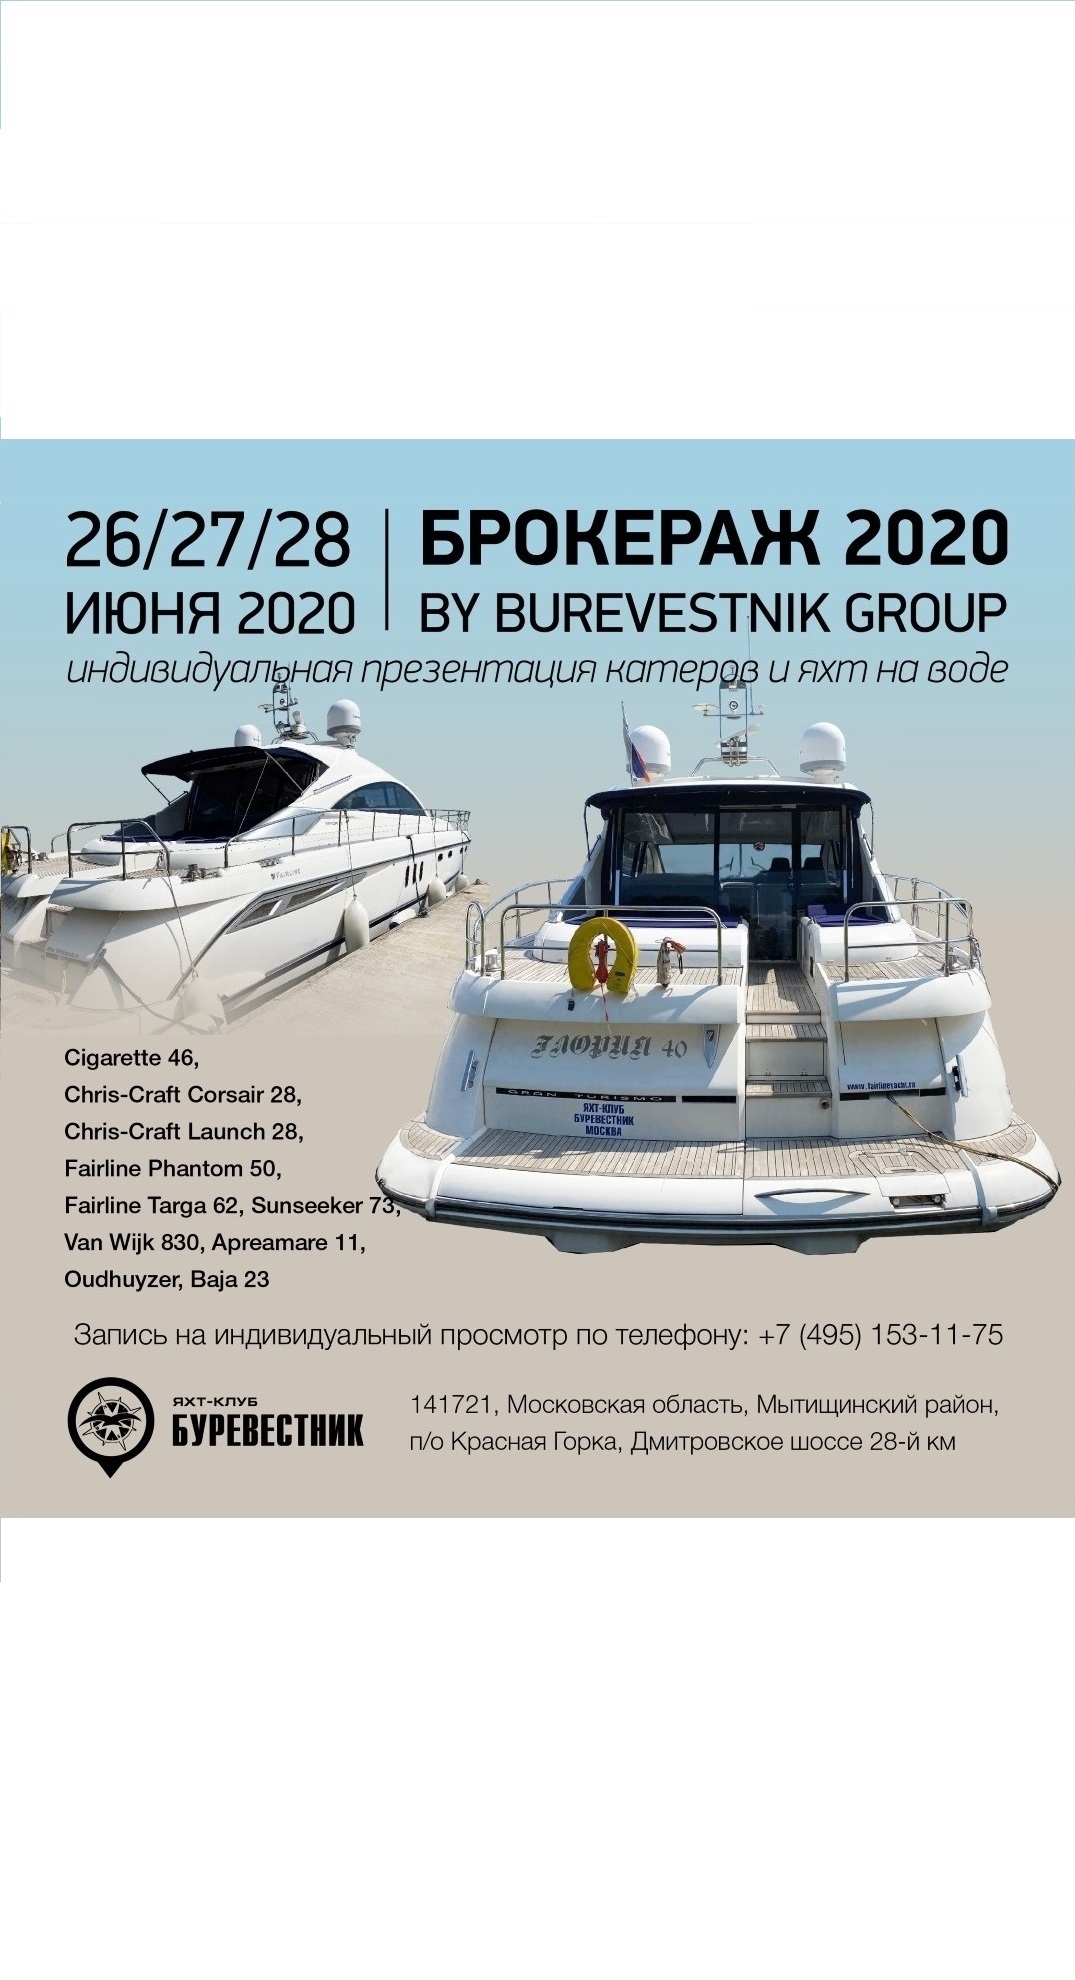 "Брокераж 2020 by Burevestnik Group"